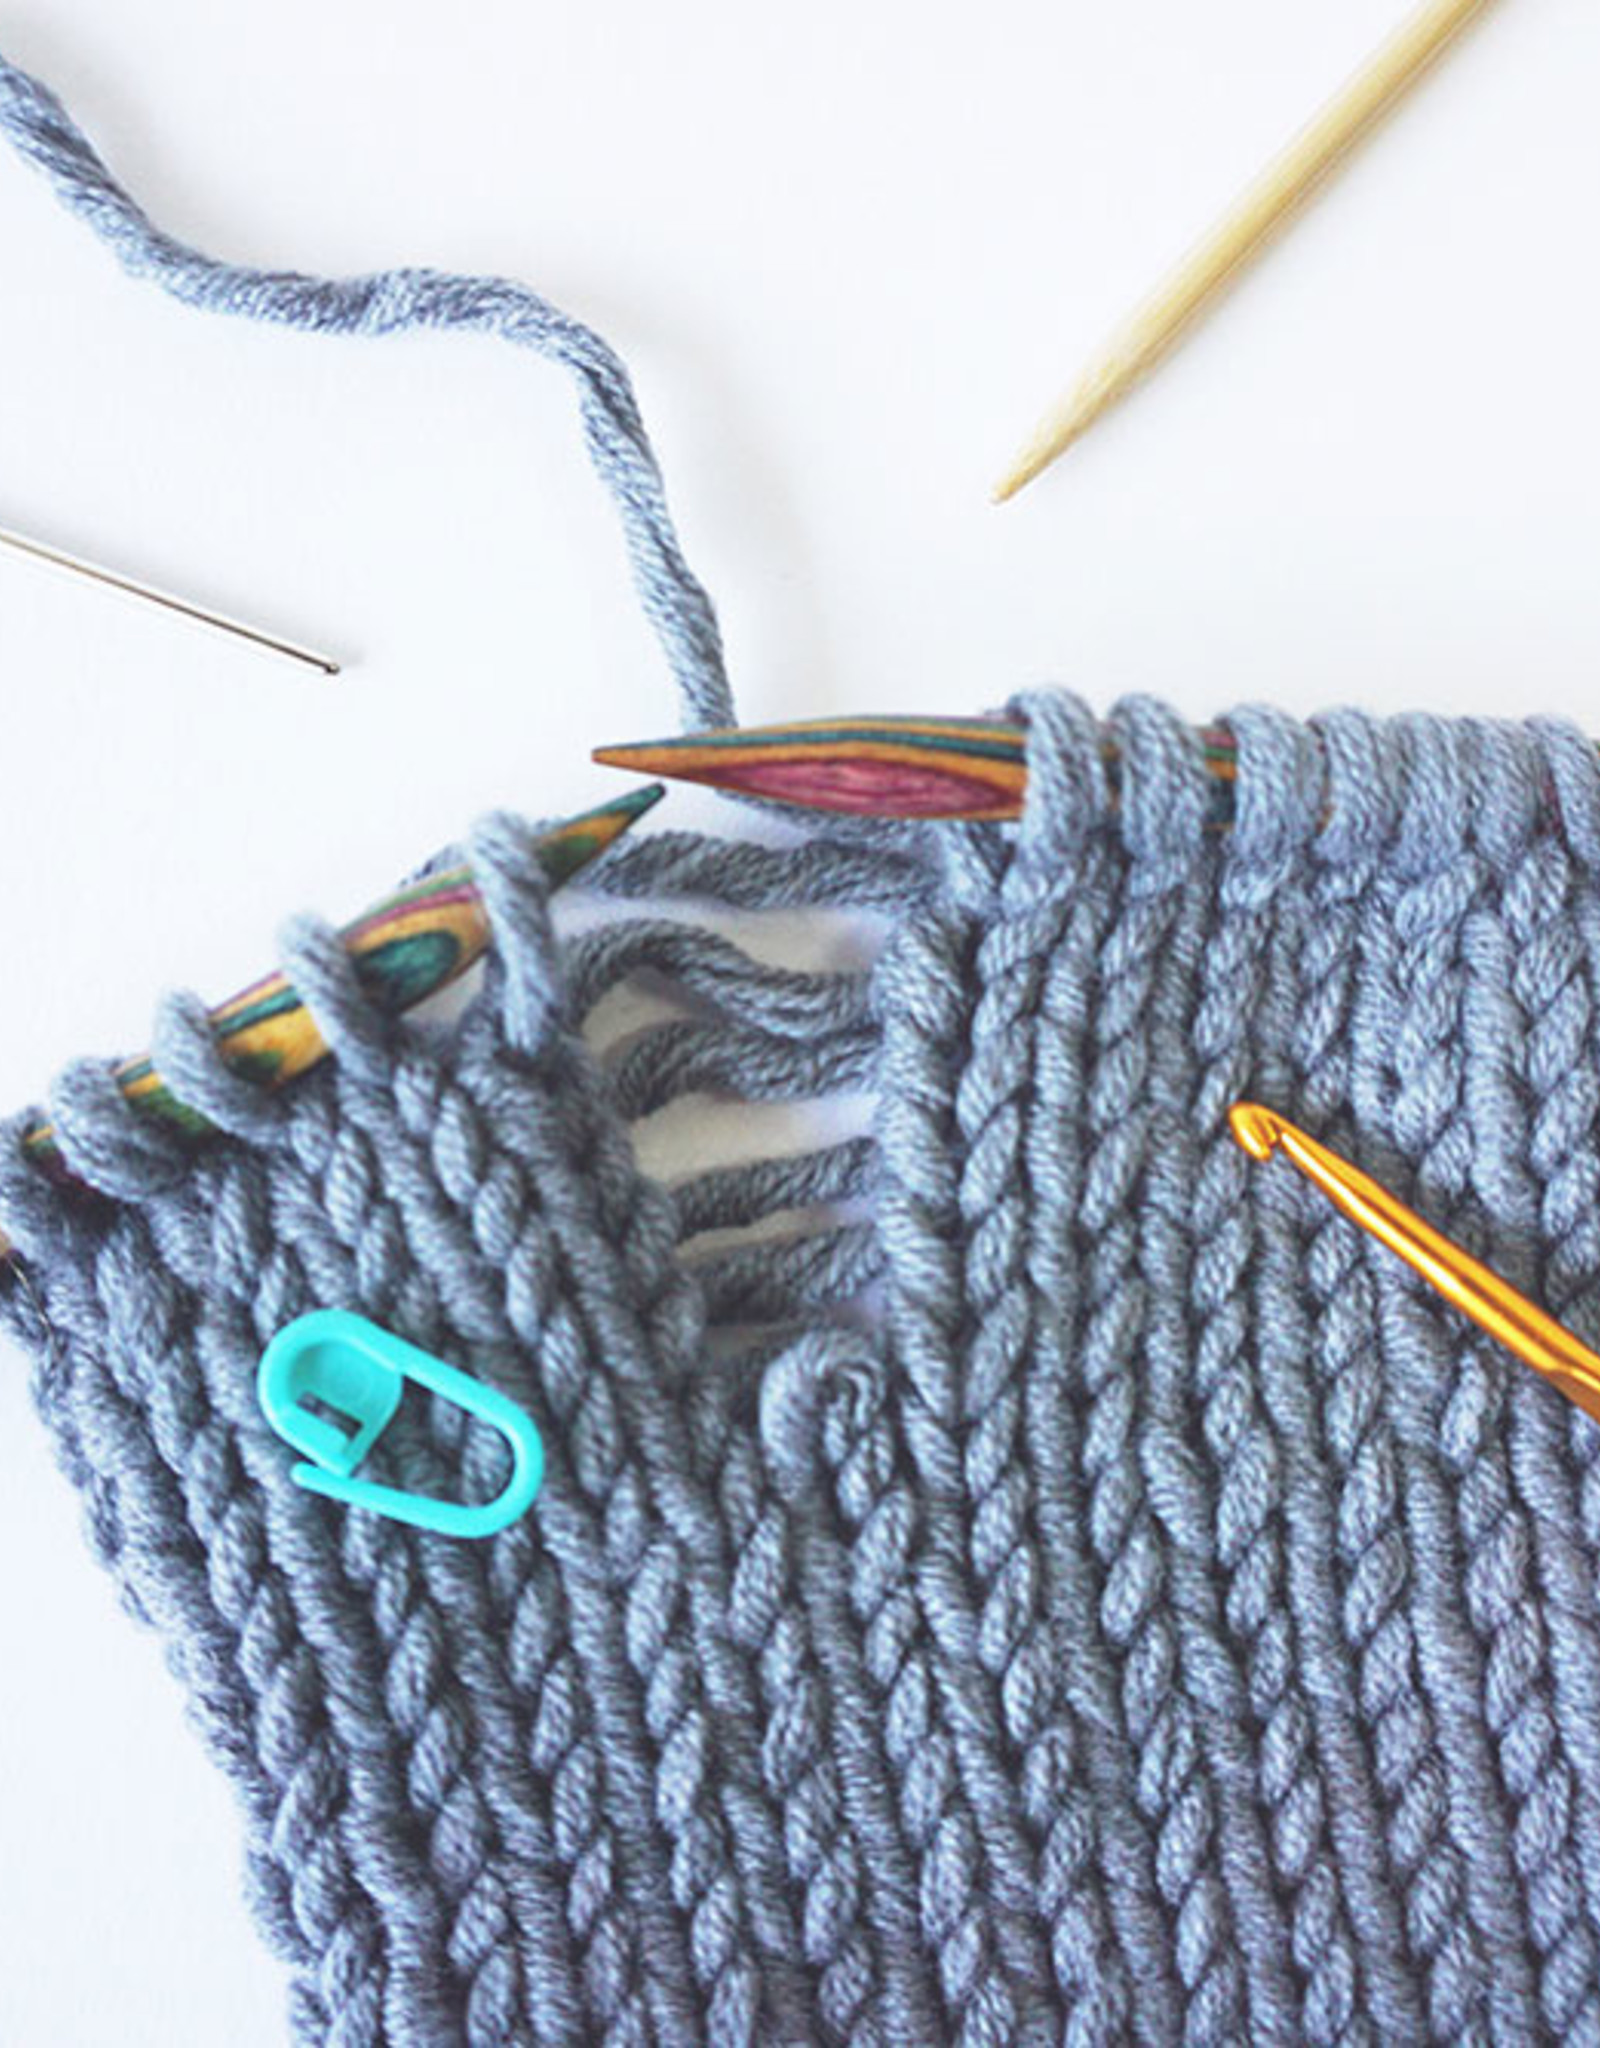 Class- Fixing Knitting Mistakes November Fall 2022